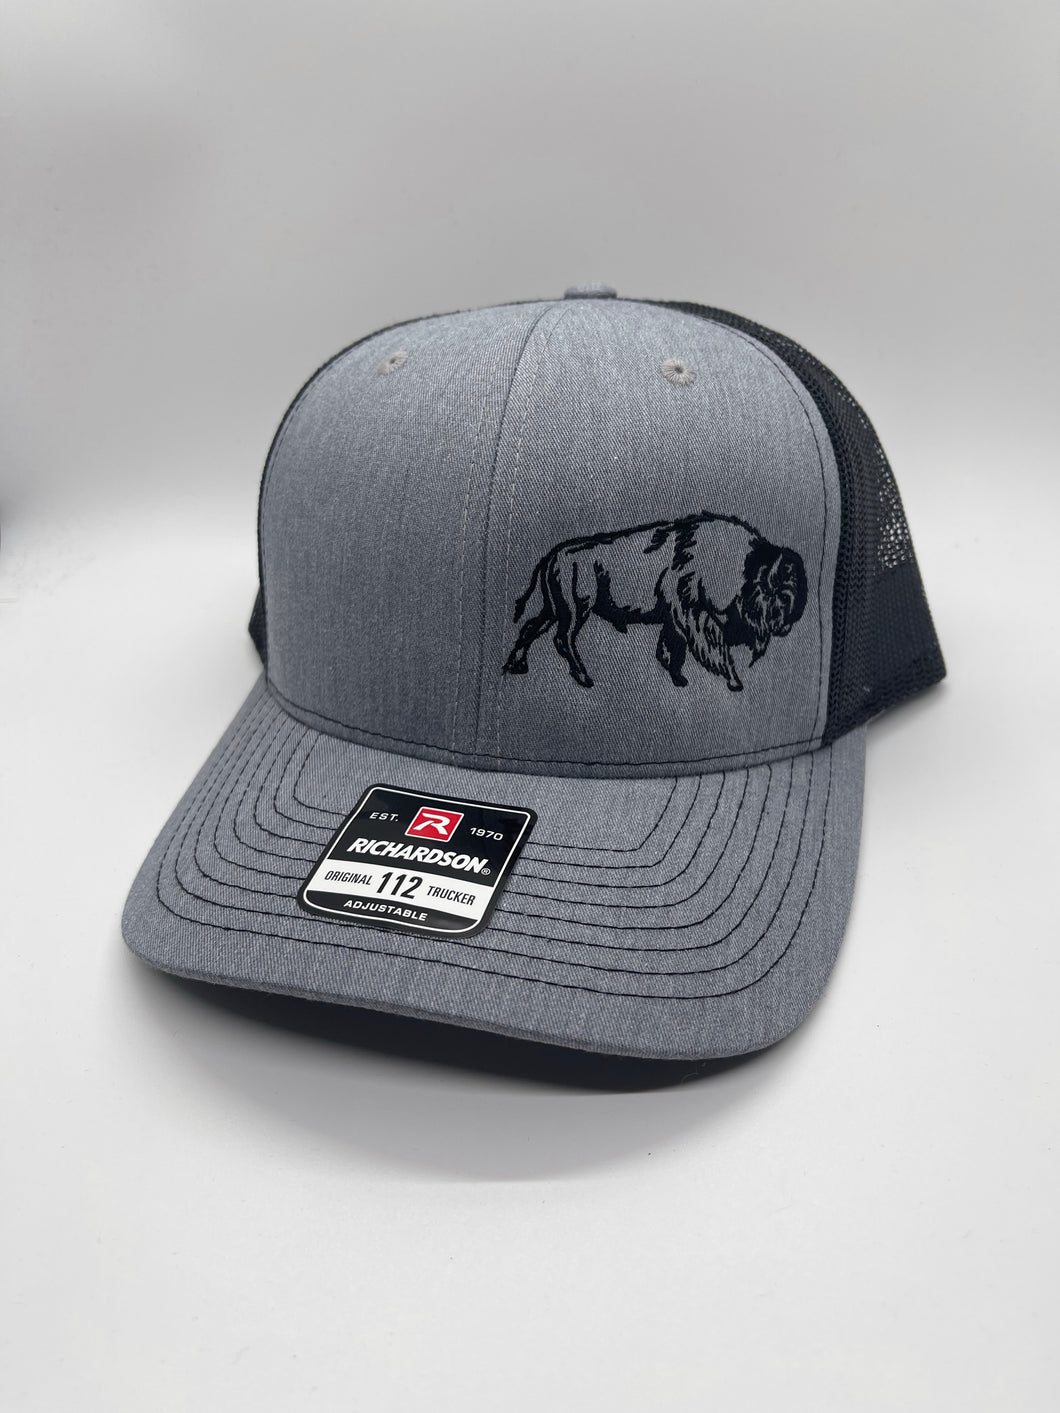 Wandering Buffalo Outline Swamp Cracker Snapback Hat